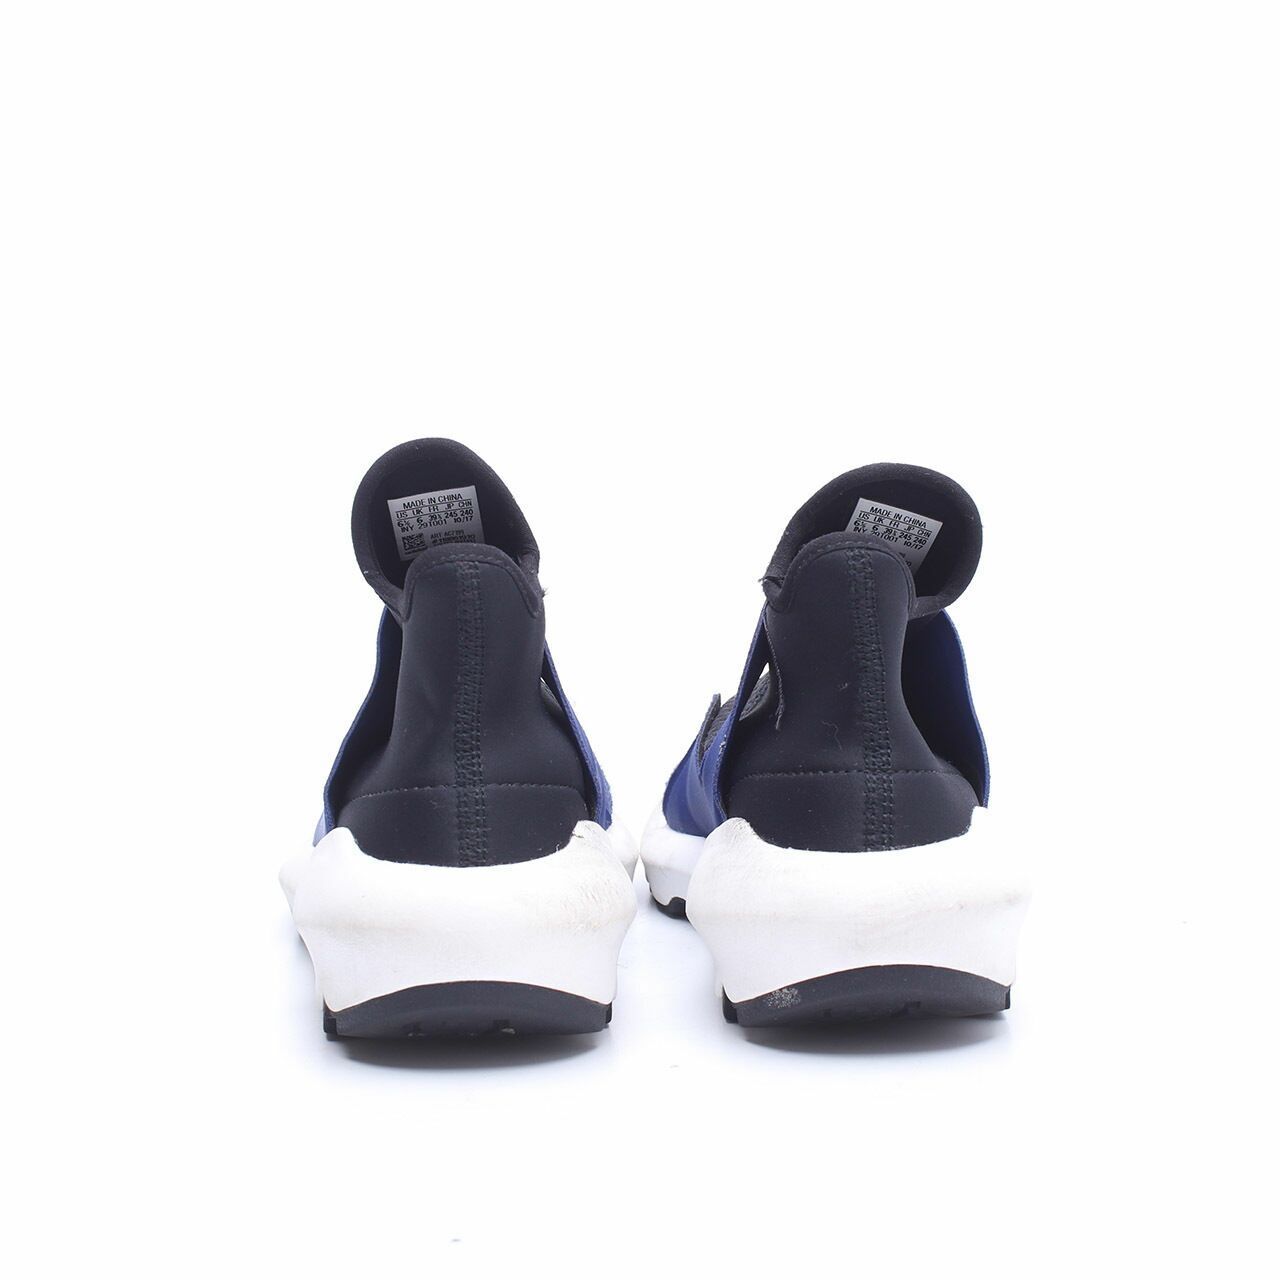 Y-3 Yohji Yamamoto x Adidas Y-3 Suberou Blue & Black Sneakers